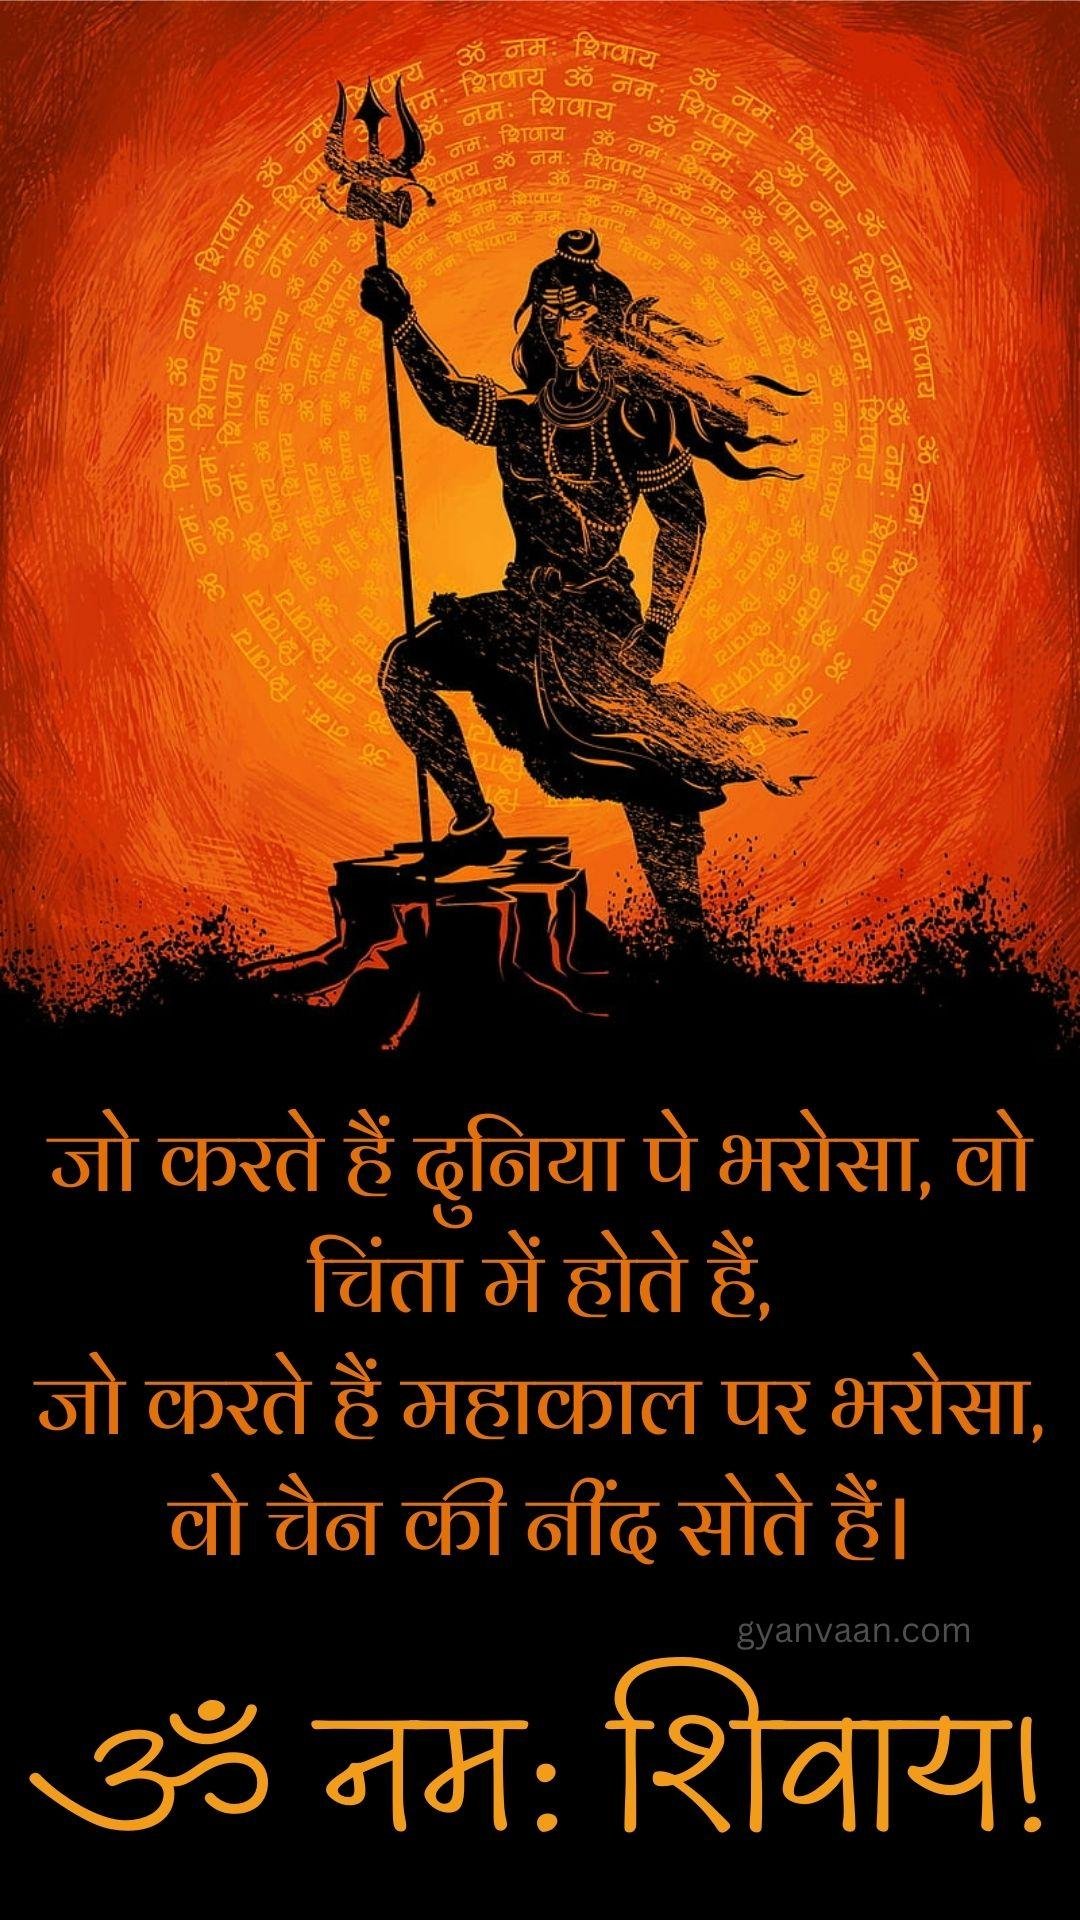 Lord Shiva Mahadev Quotes And Mahakal Status In Hindi For Mobile 16 - Shiva Quotes